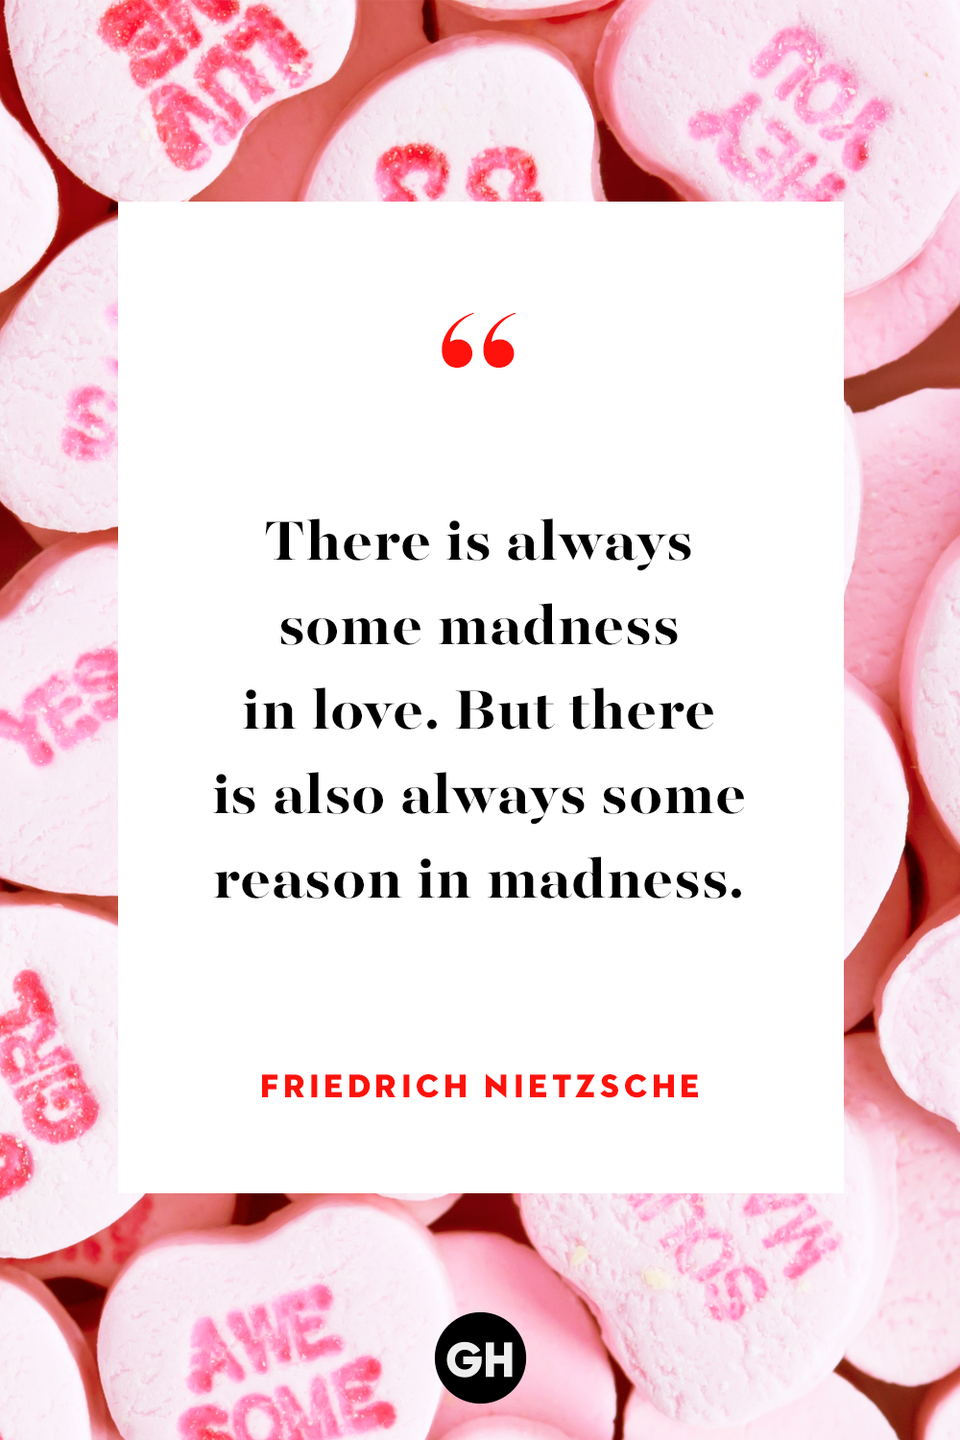 65) Friedrich Nietzsche